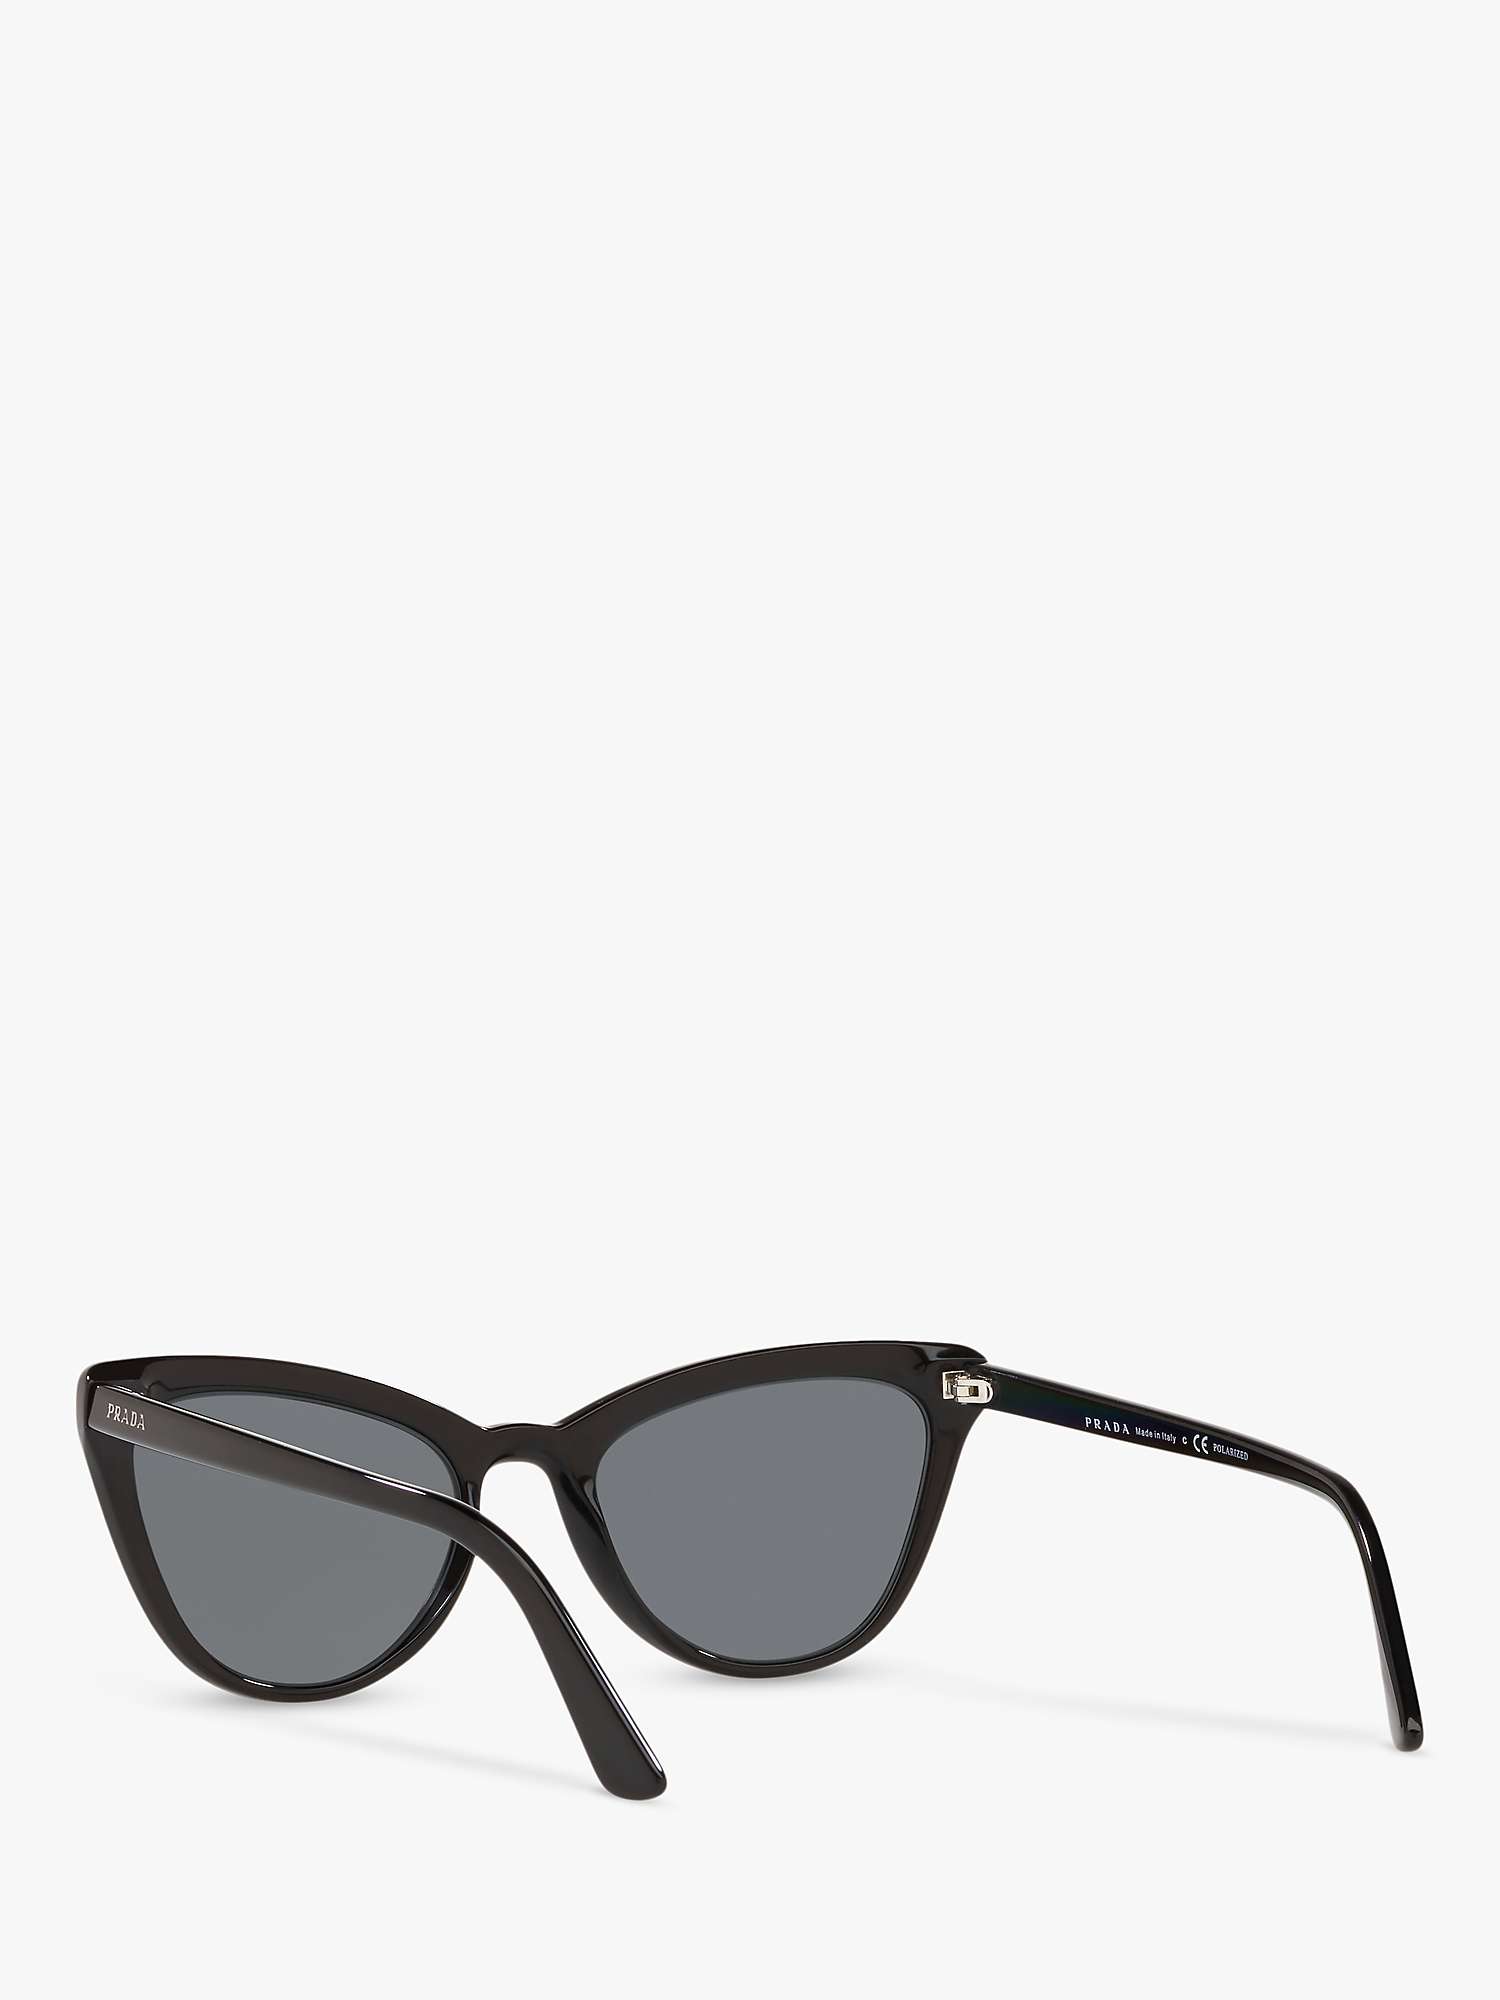 Buy Prada PR 01VS Women's Polarised Cat's Eye Sunglasses, Black/Grey Online at johnlewis.com